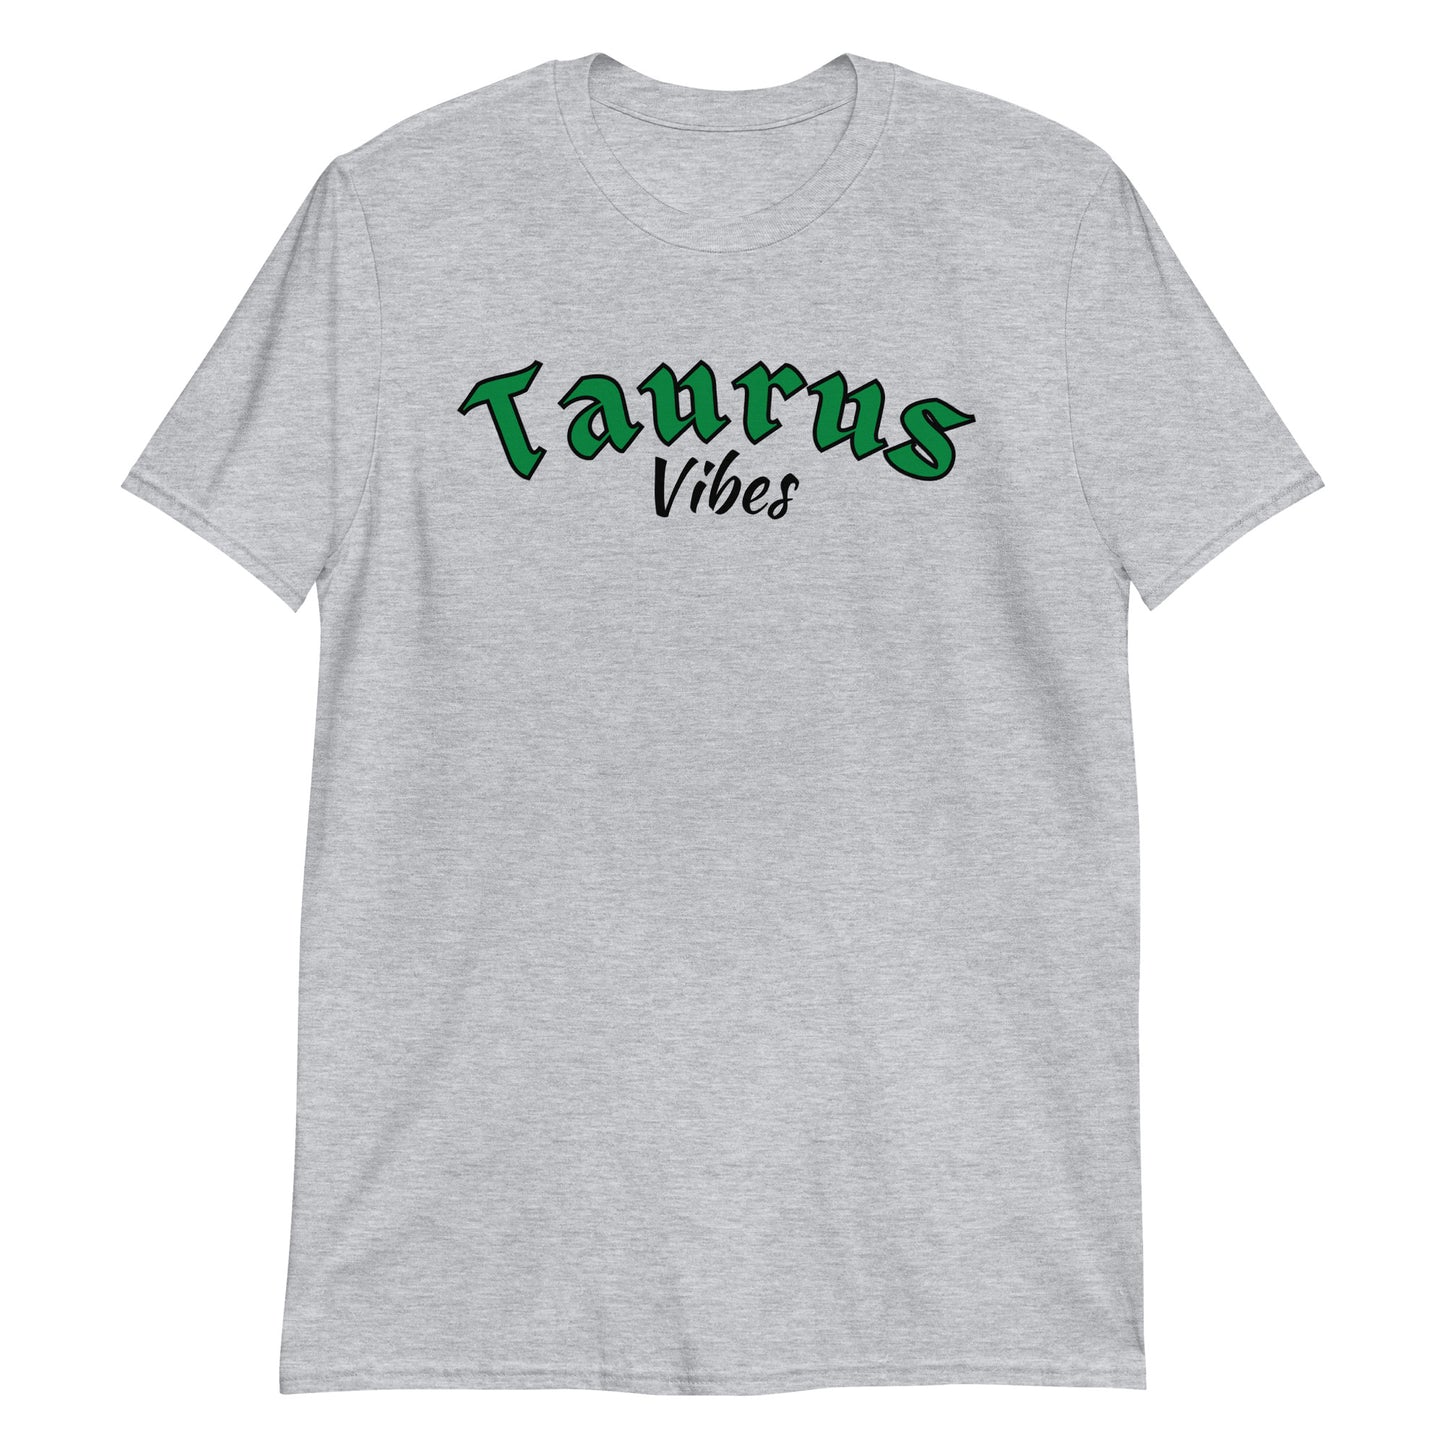 Taurus Short-Sleeve Unisex T-Shirt